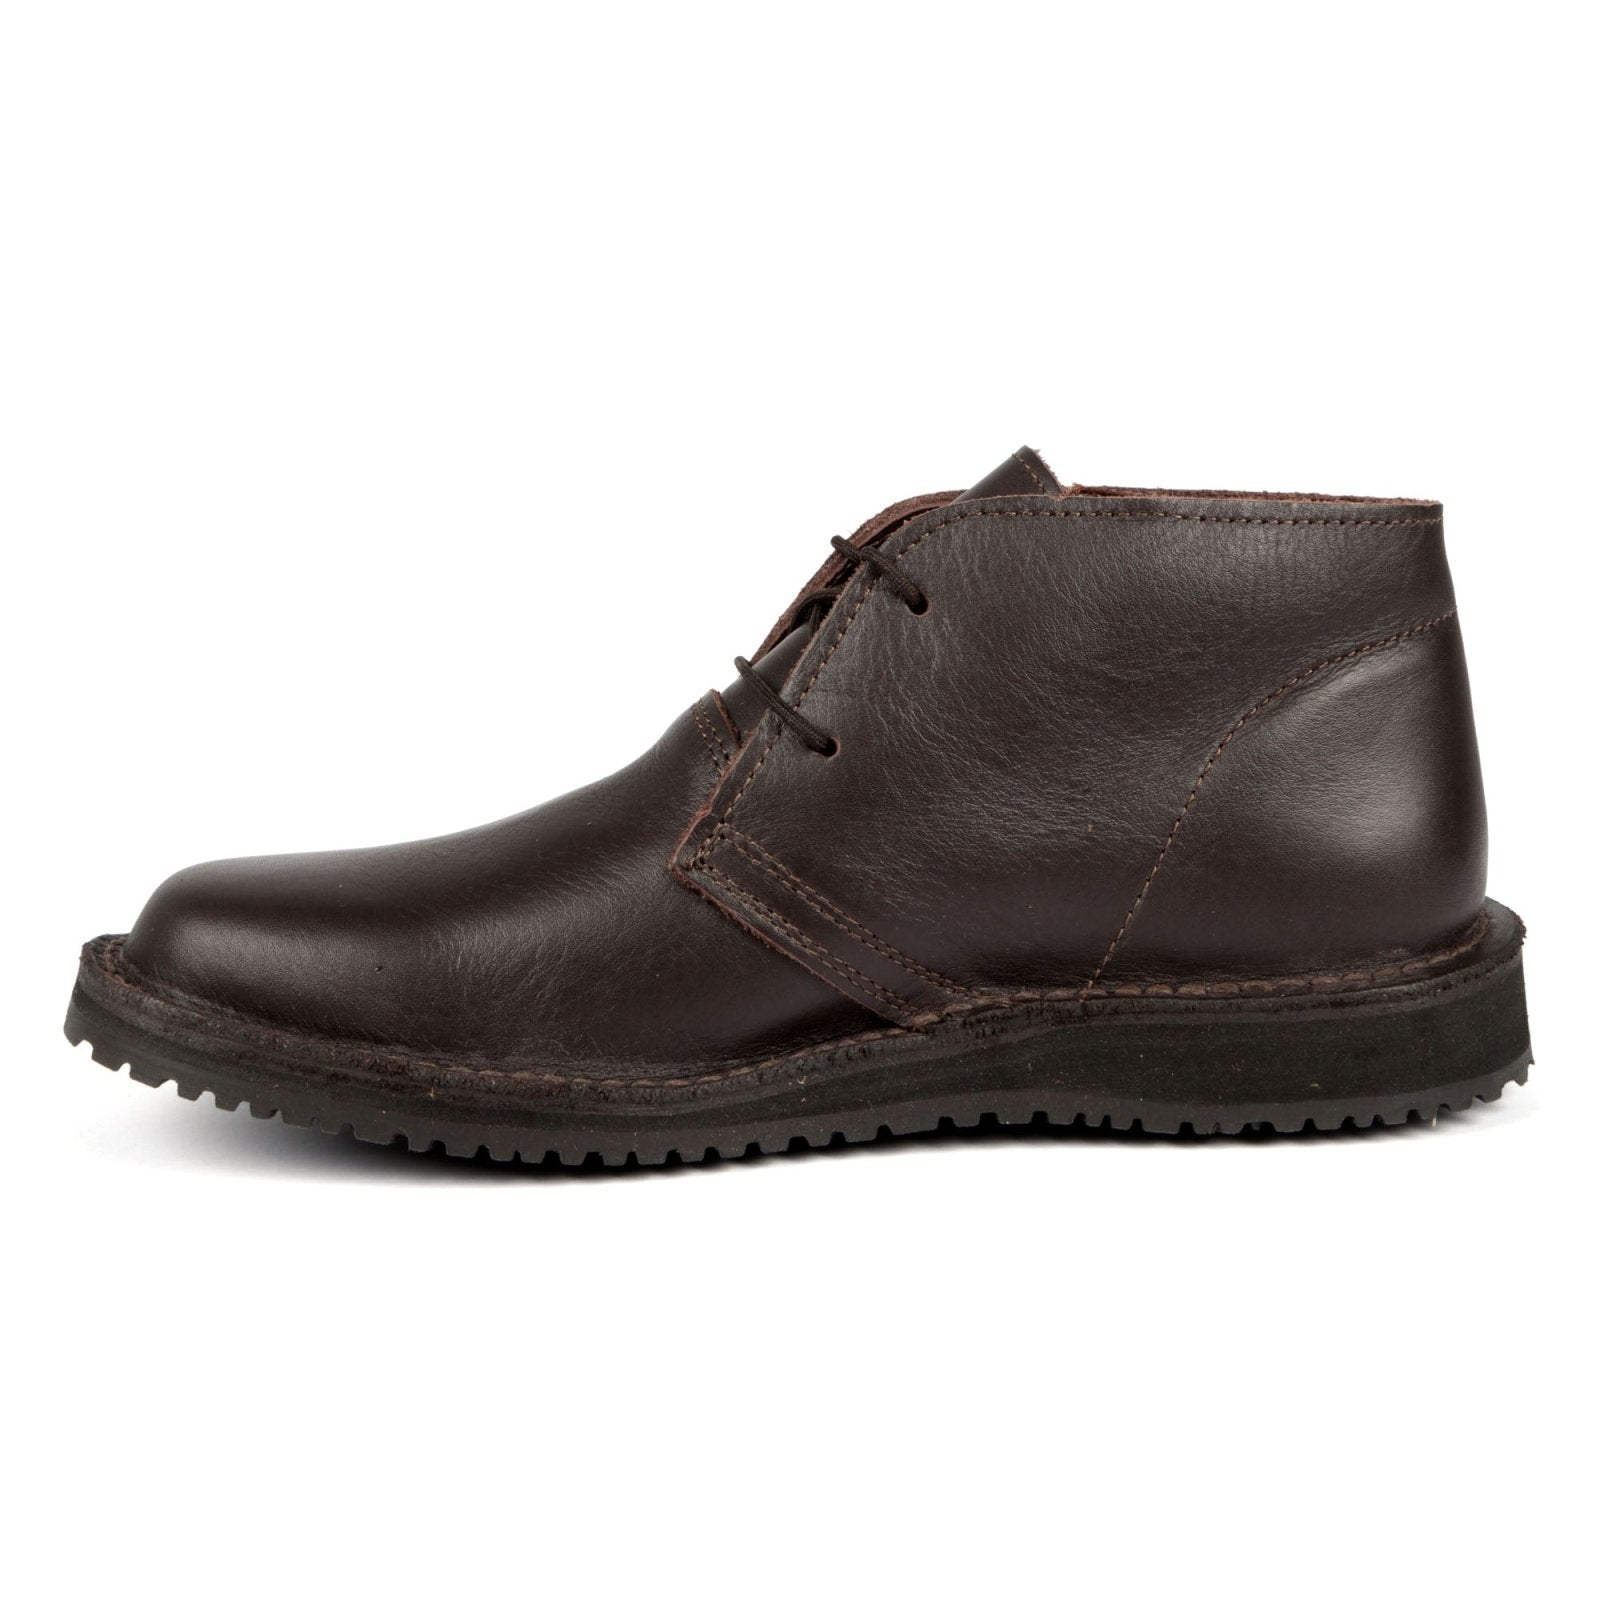 Nyala Premium Suede and Leather Veldskoen - Freestyle SA Proudly local leather boots veldskoens vellies leather shoes suede veldskoens